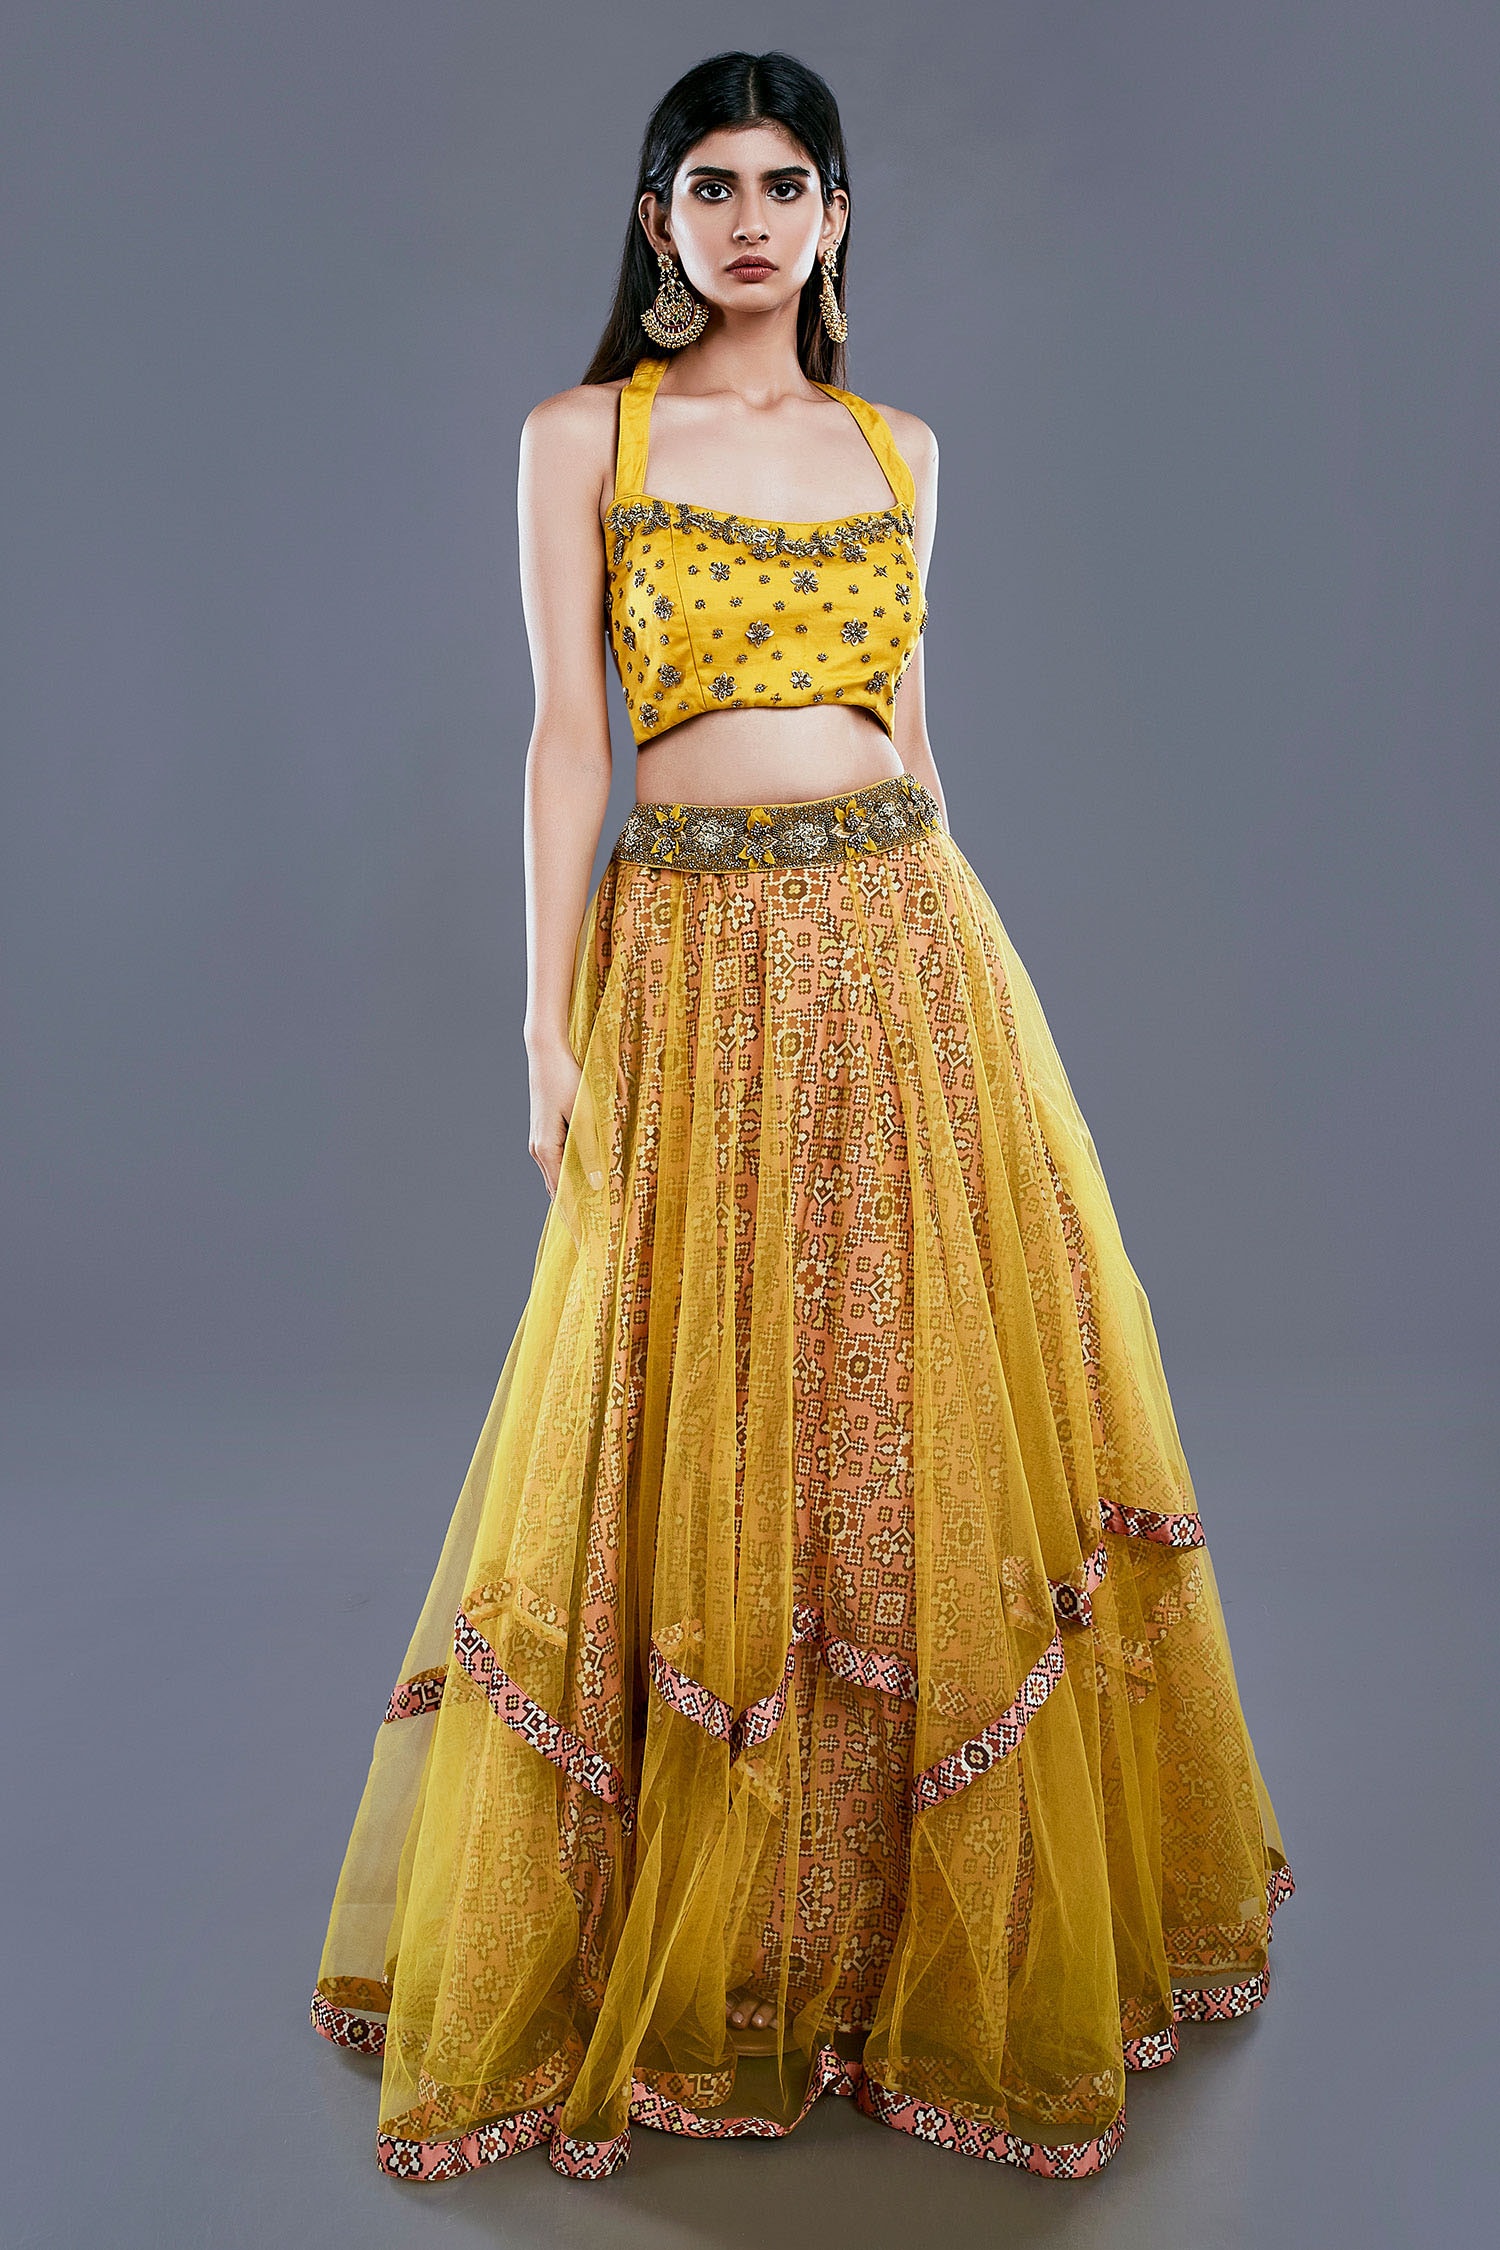 12 Amazing Haldi Outfit Ideas for Bride - KALKI Fashion Blog